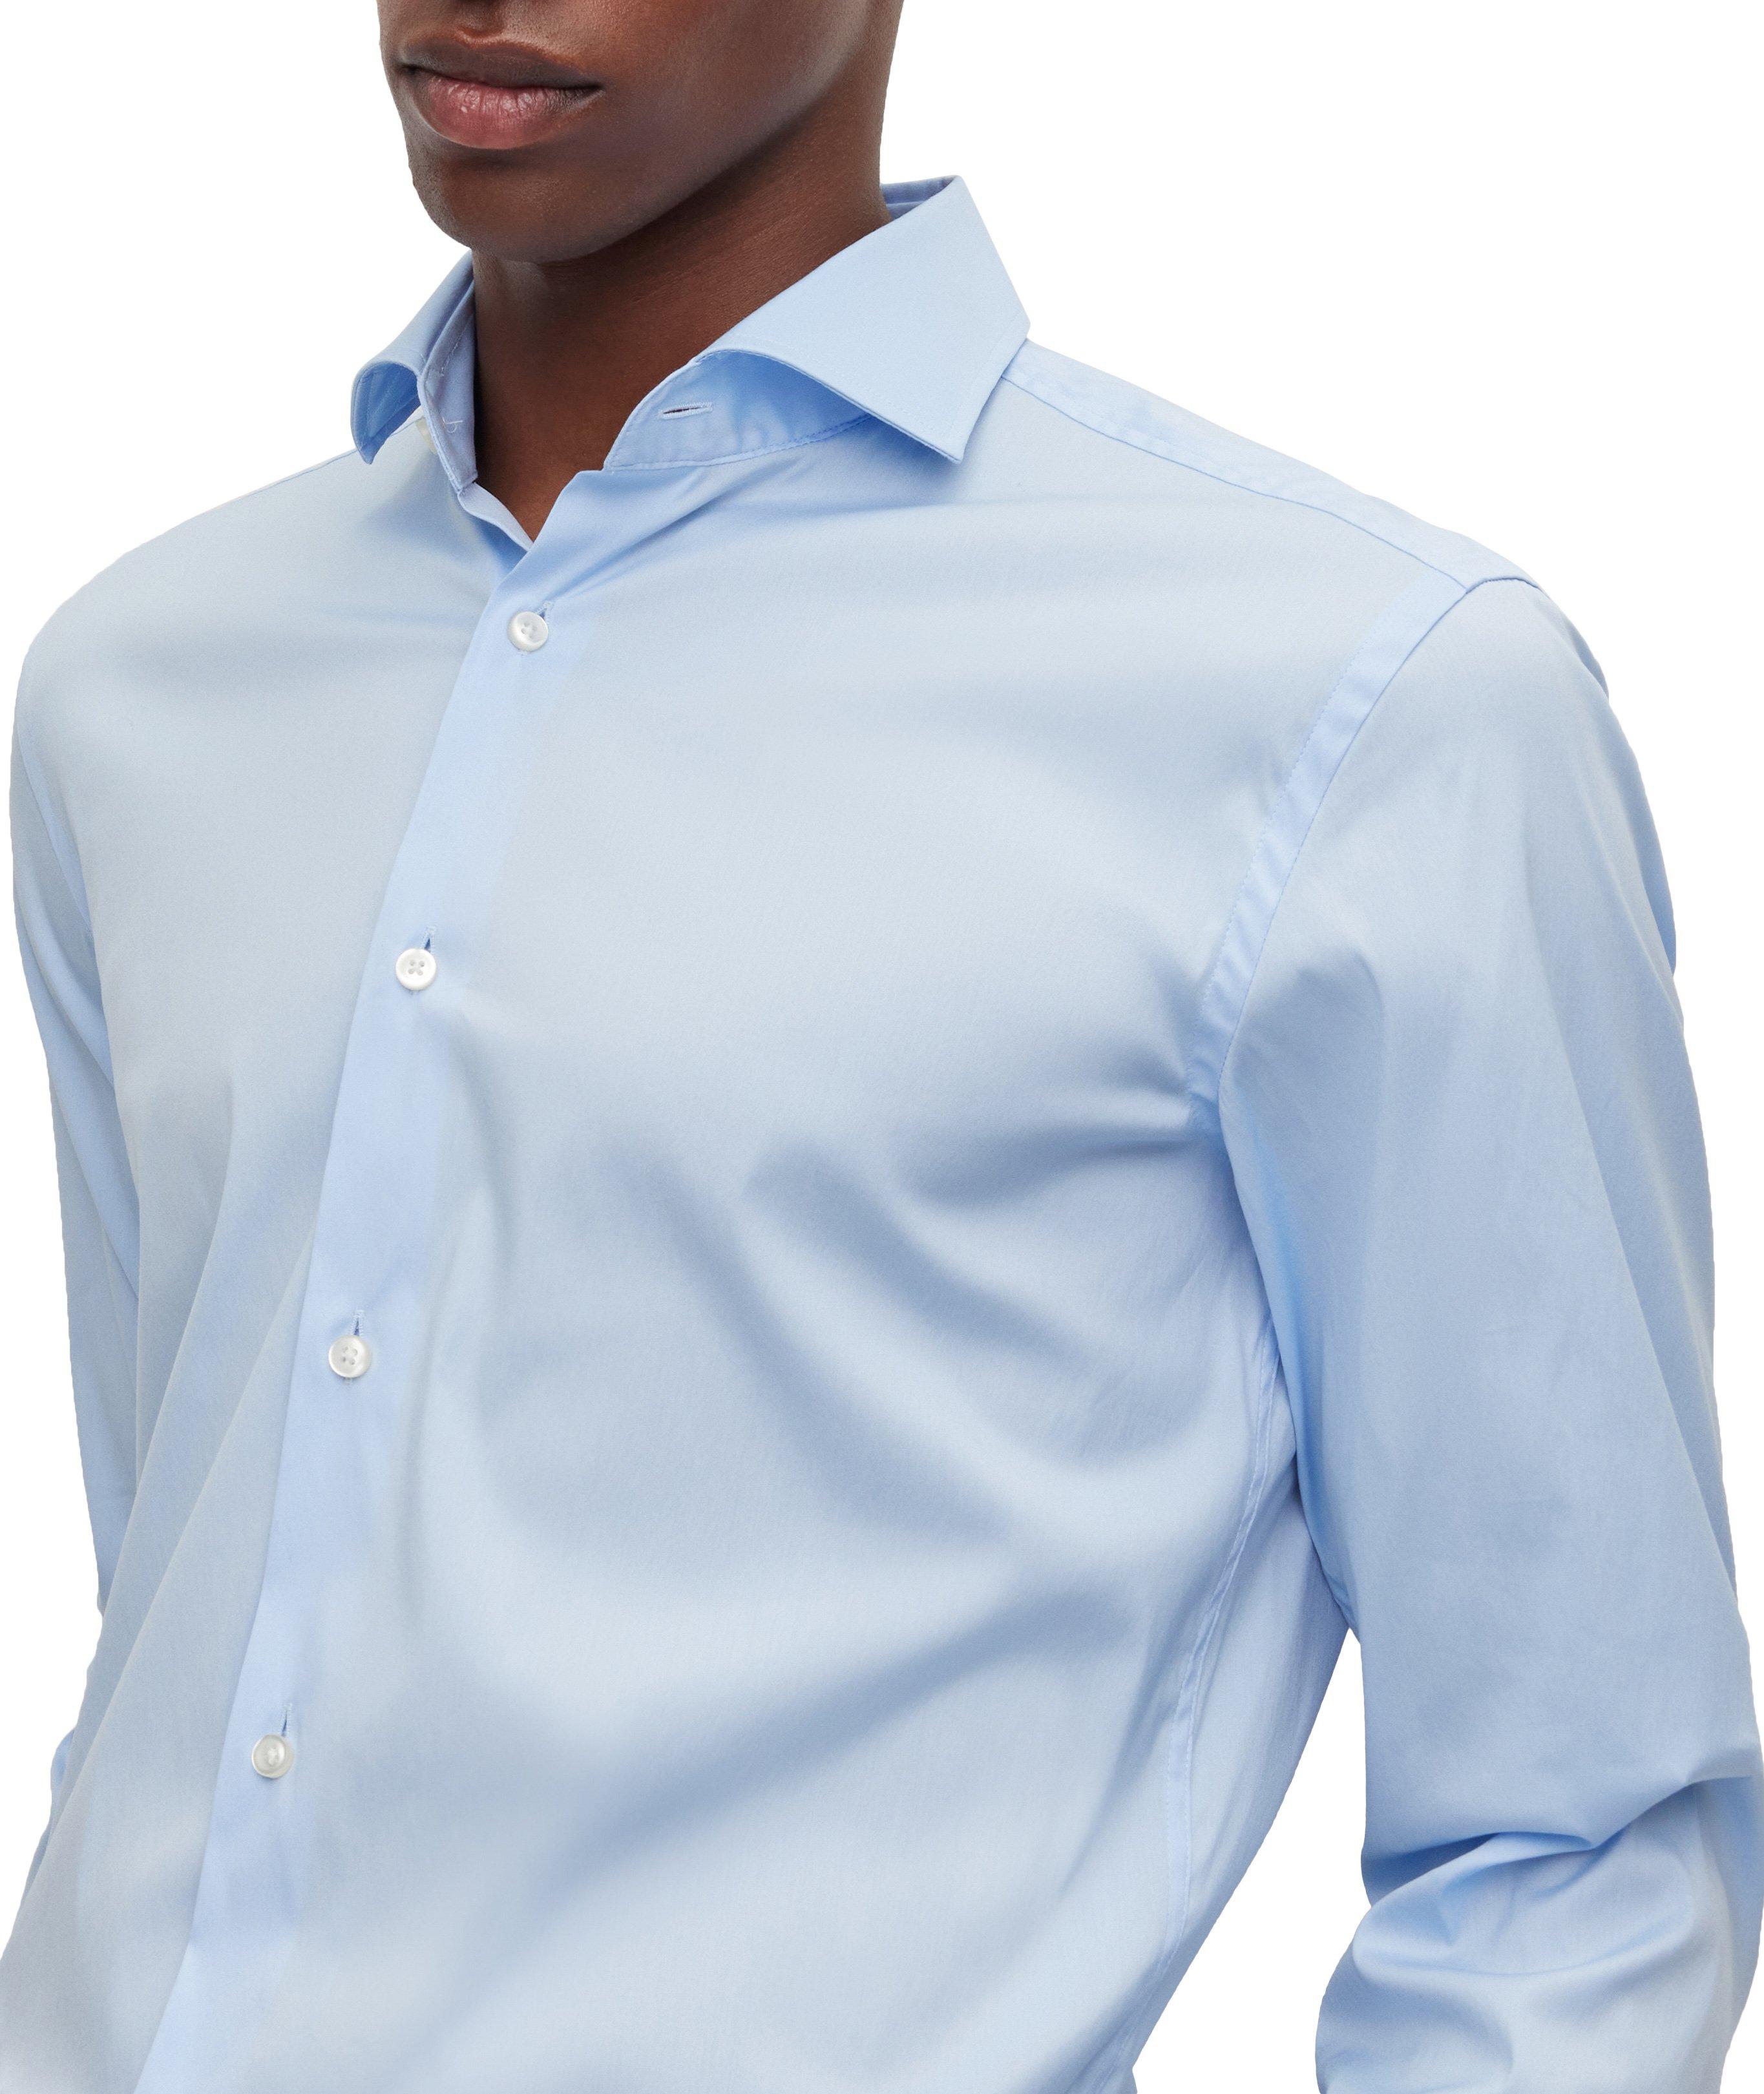 Slim-Fit Cotton-Blend Poplin Dress Shirt image 4